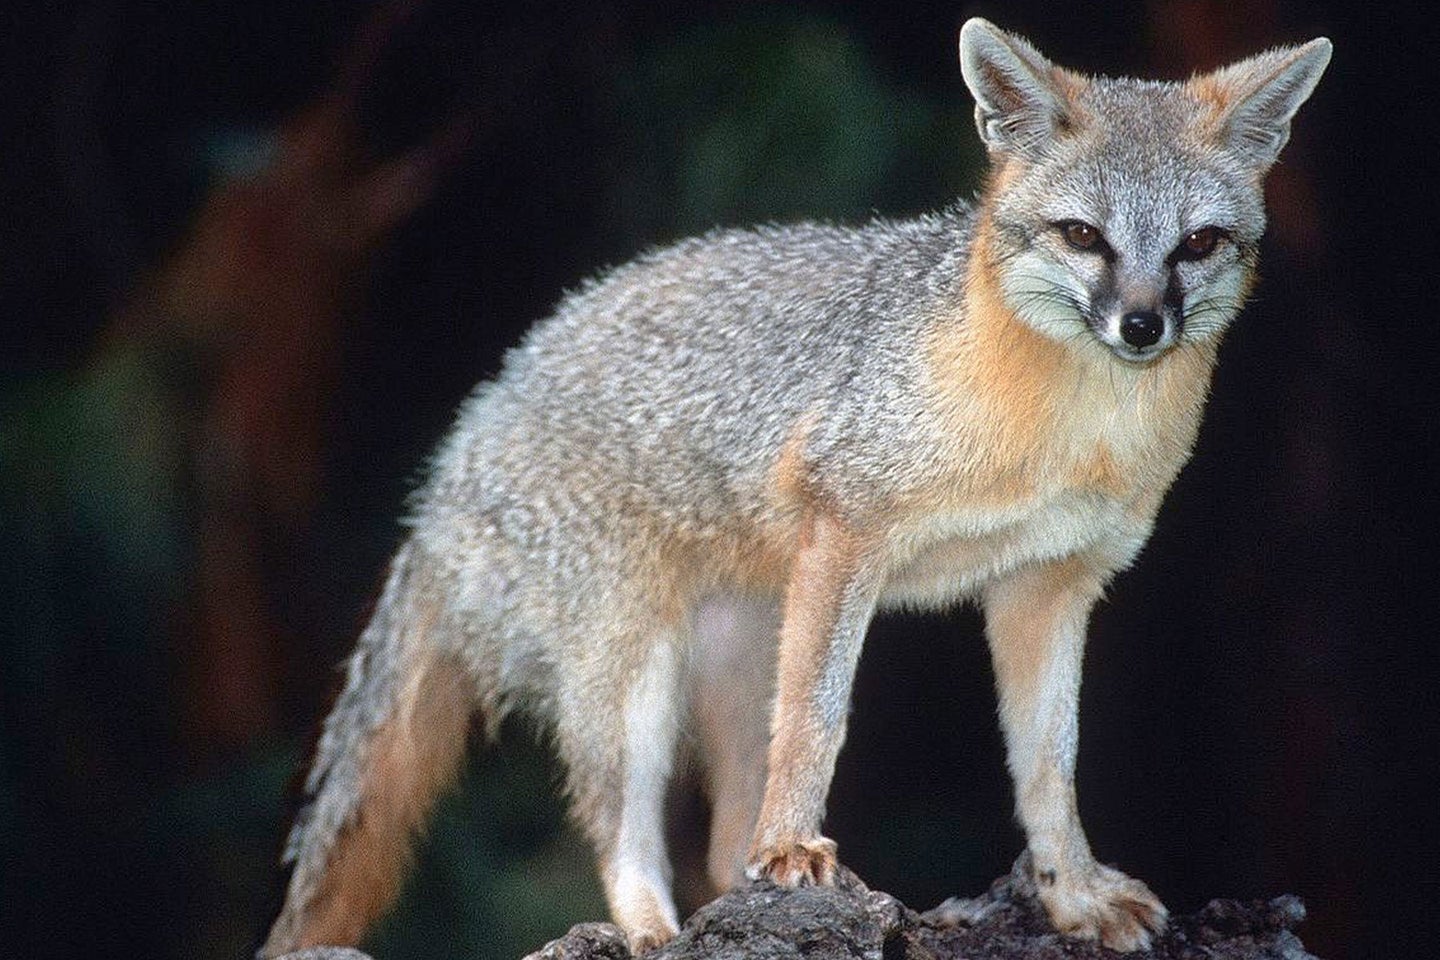 A grey fox in Arizona.